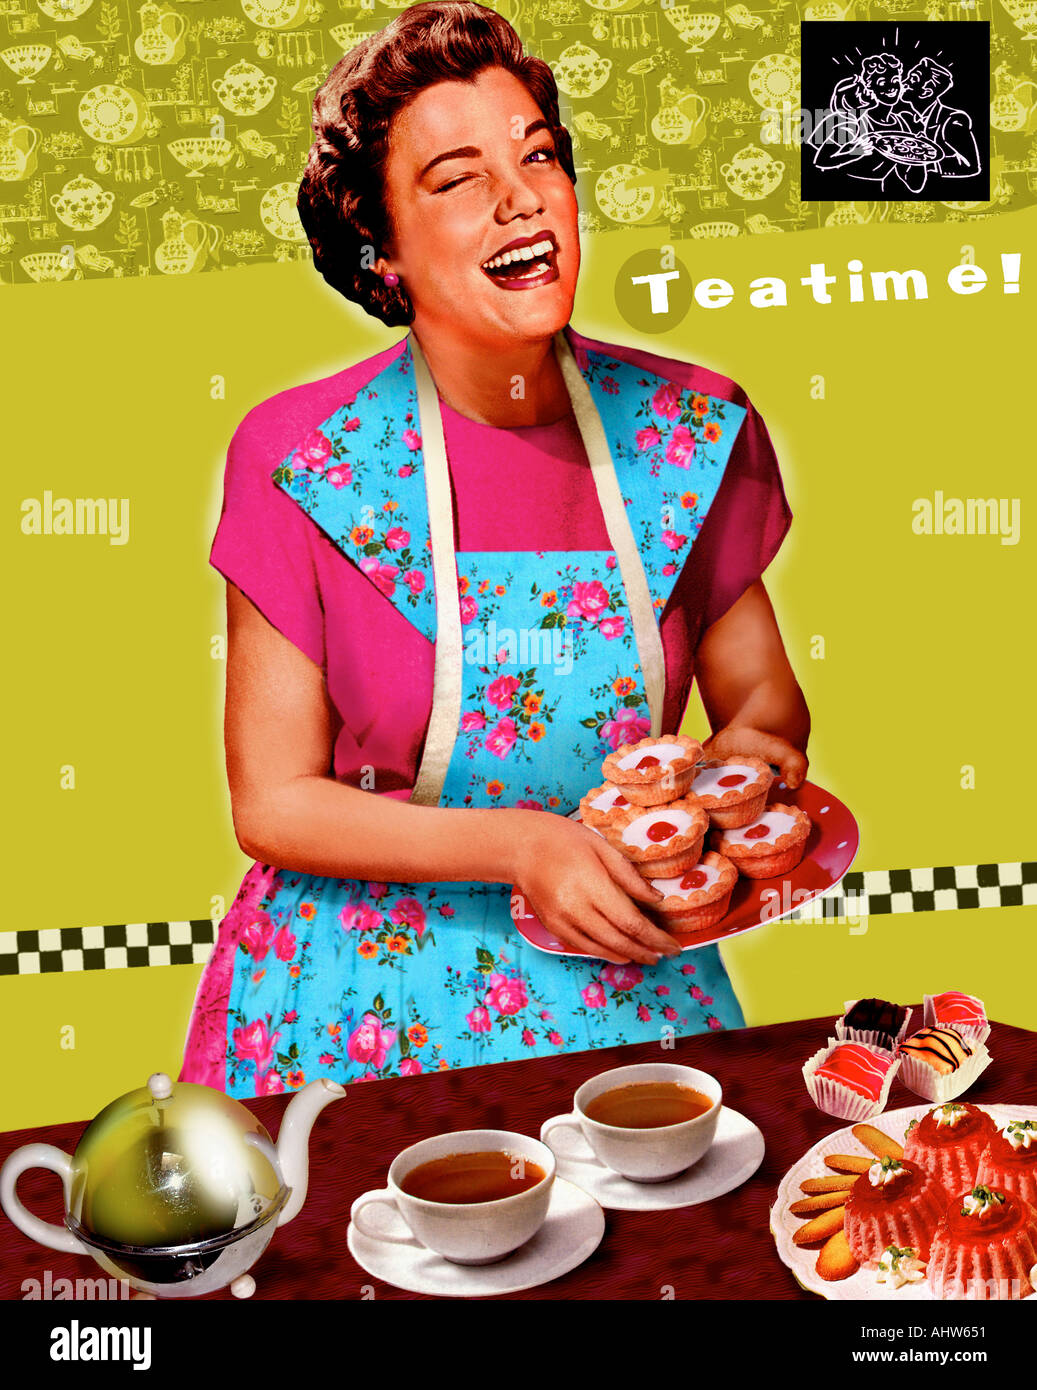 housewife Teatime Stock Photo